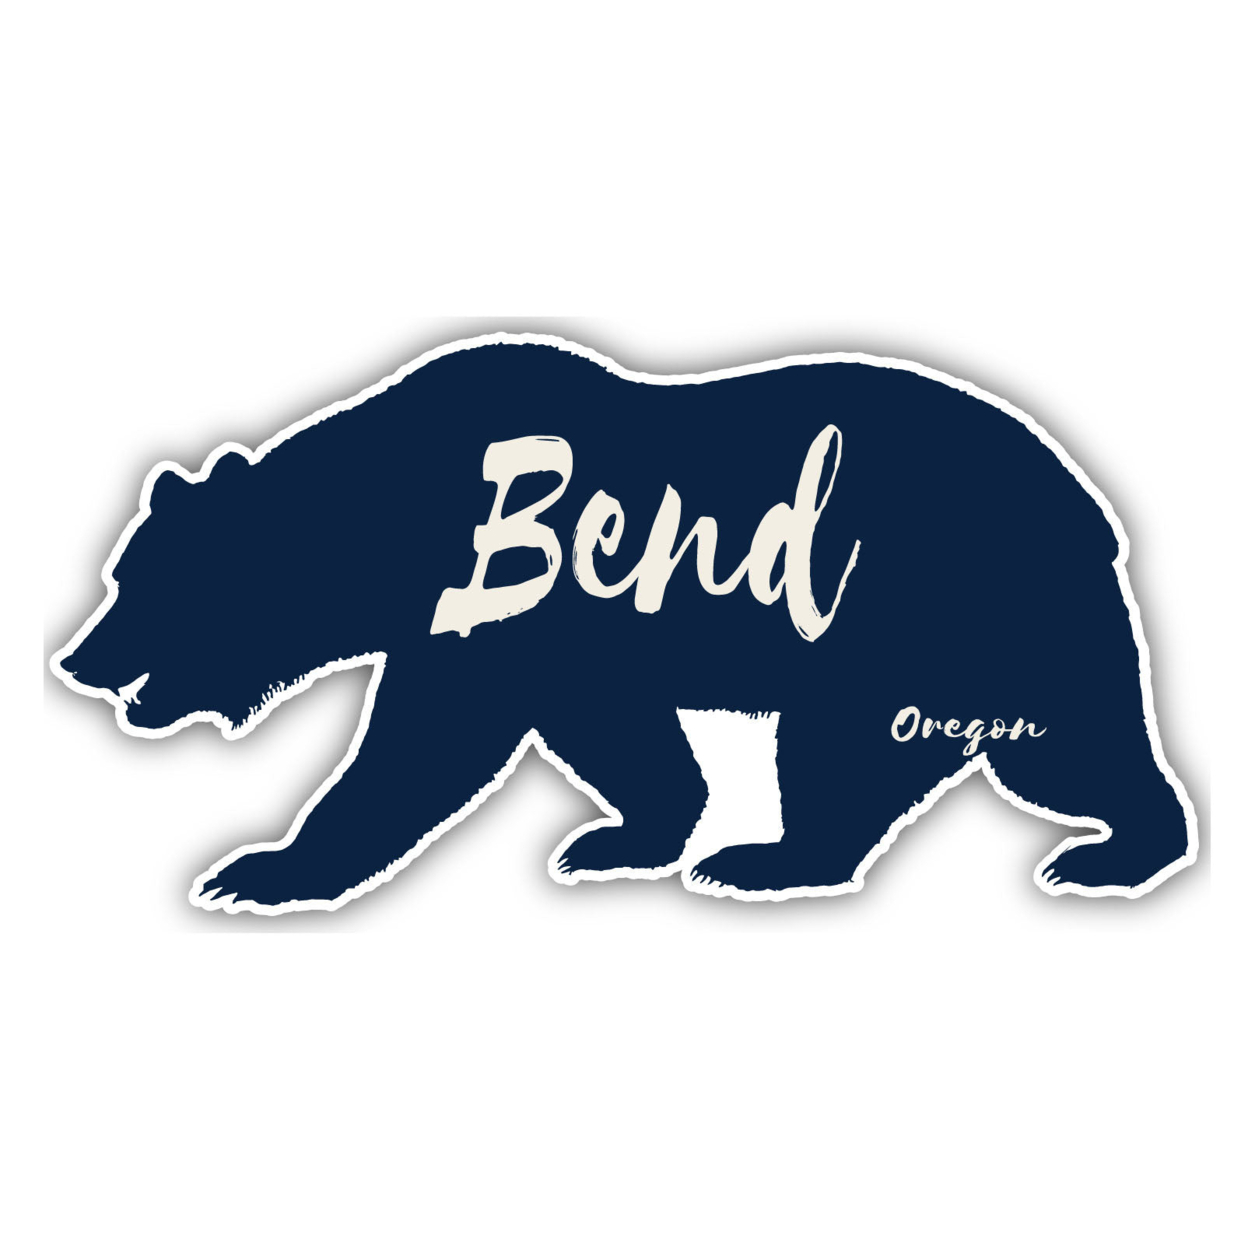 Bend Oregon Souvenir Decorative Stickers (Choose Theme And Size) - Single Unit, 8-Inch, Bear